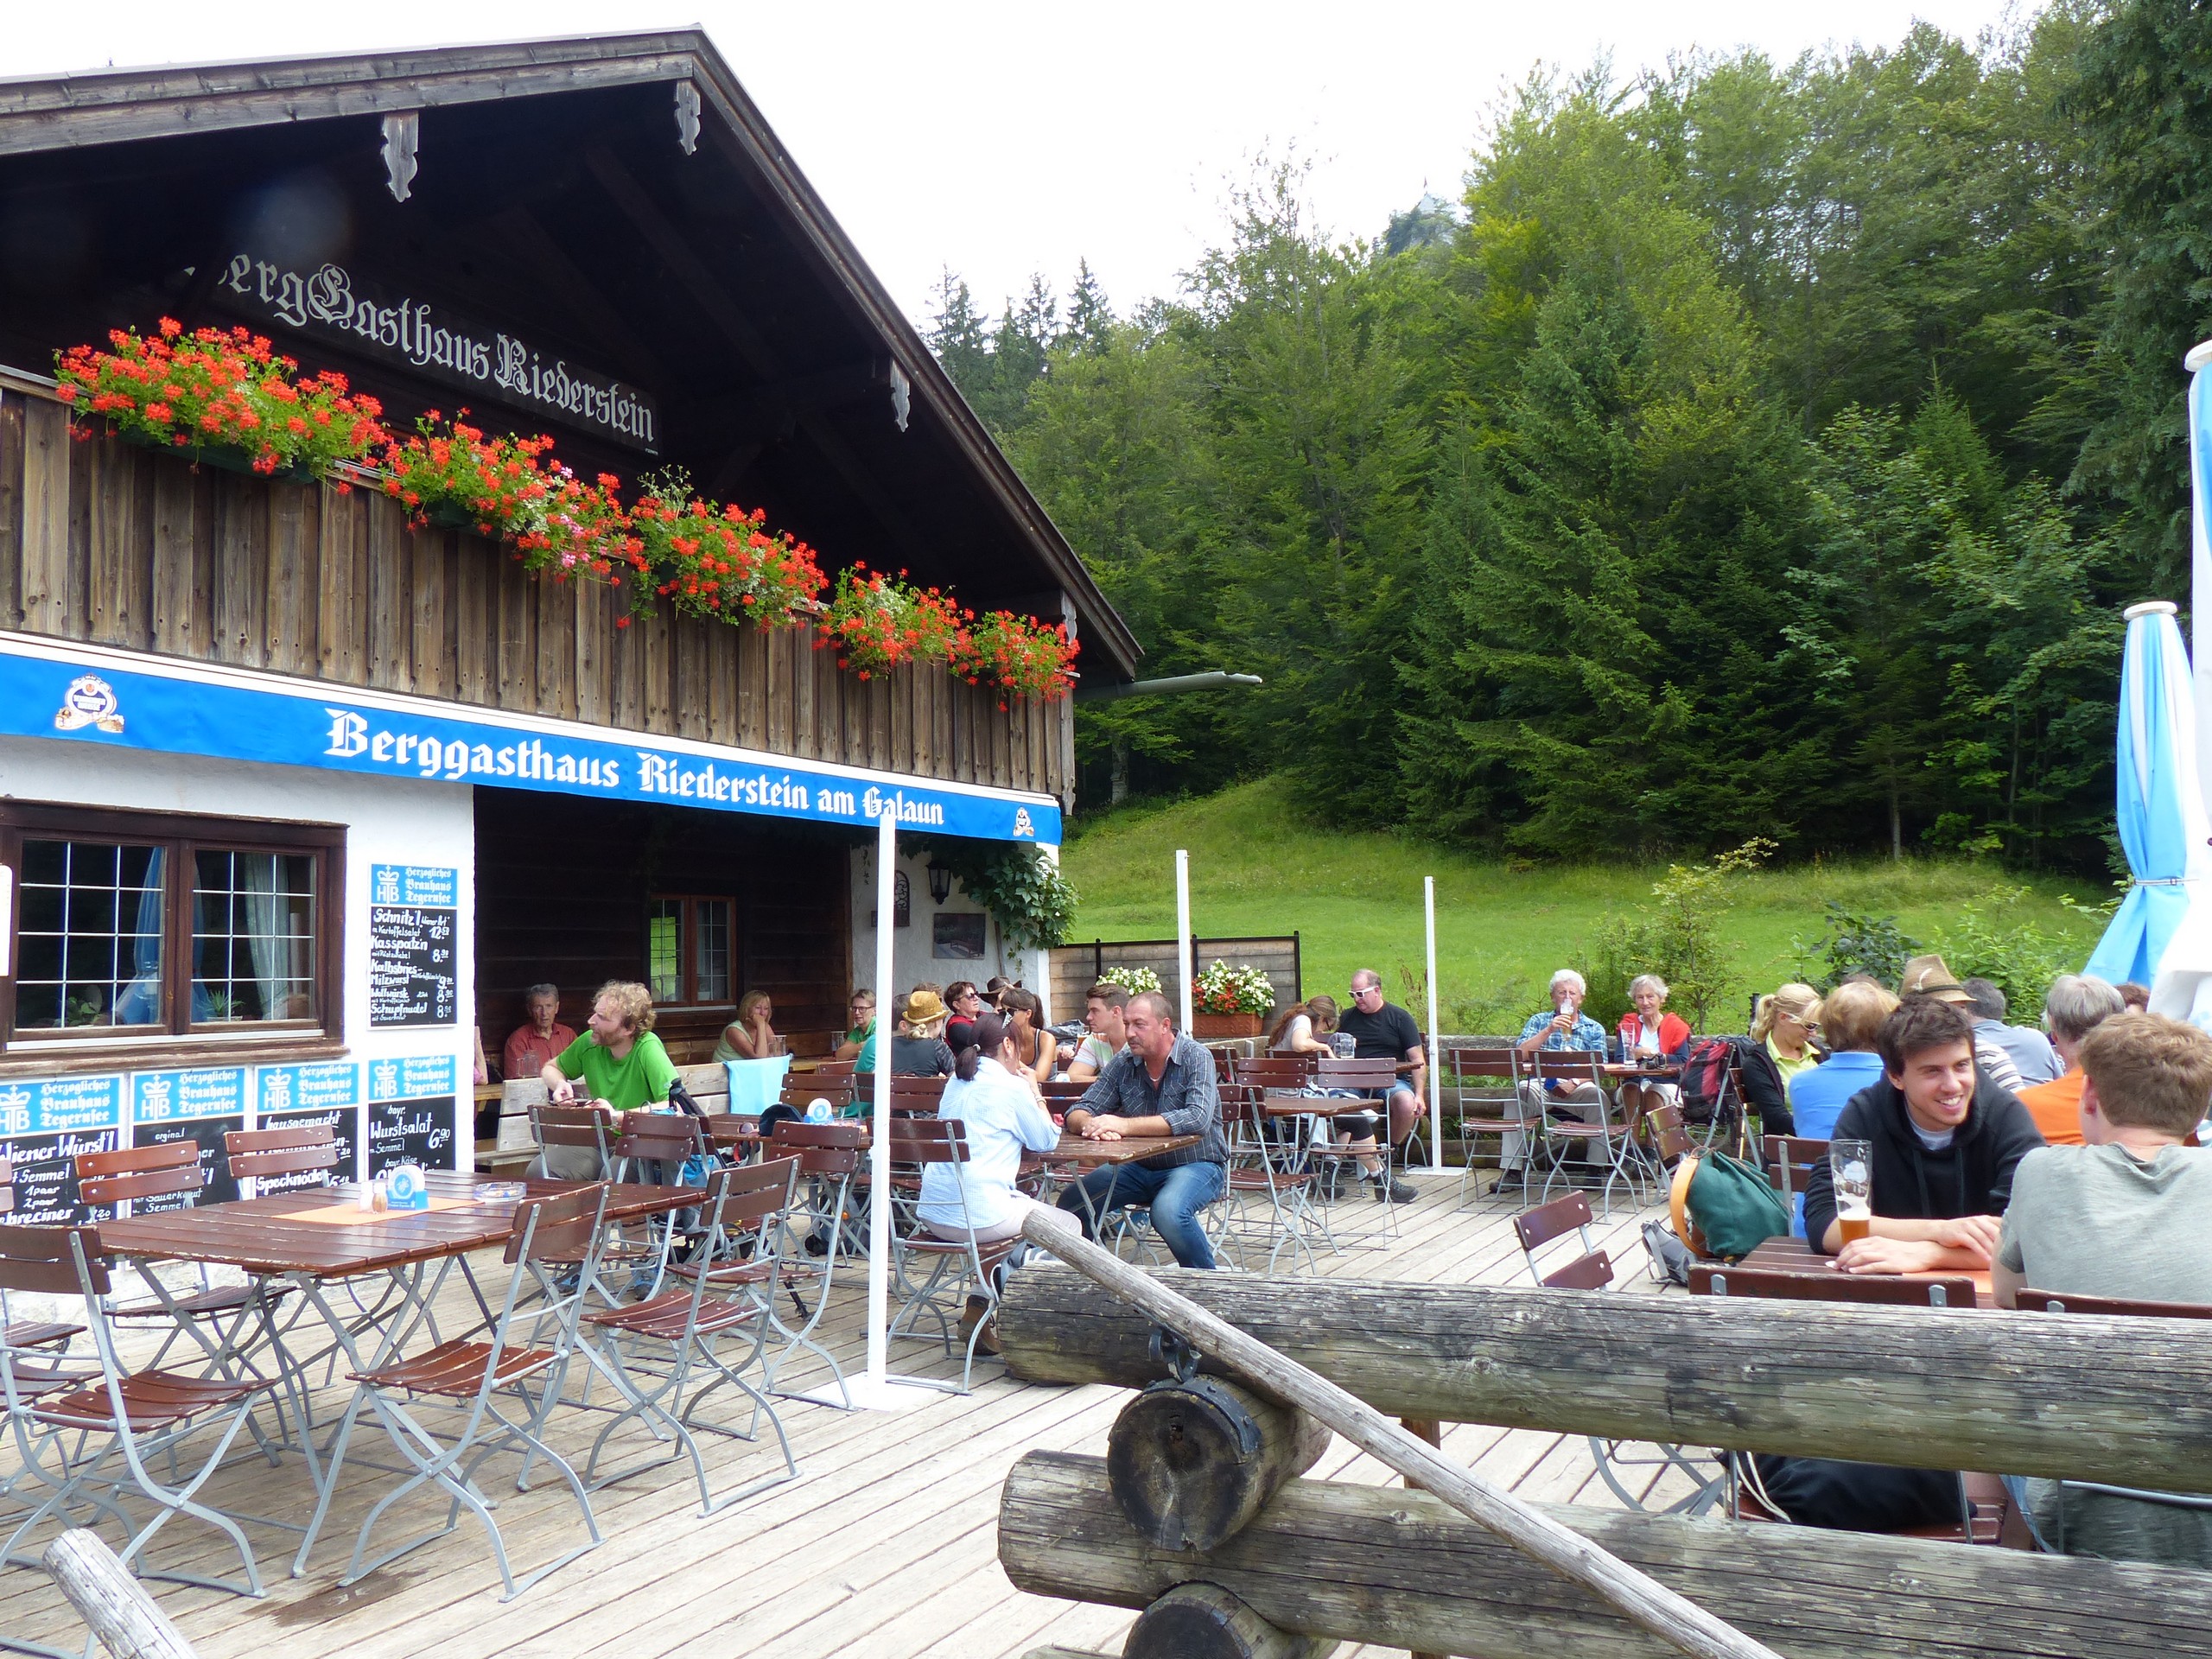 Bavarian Alps and Lakes Self-guided Hiking Tour Bayerische Alpen_Riederstein_Berggasthaus